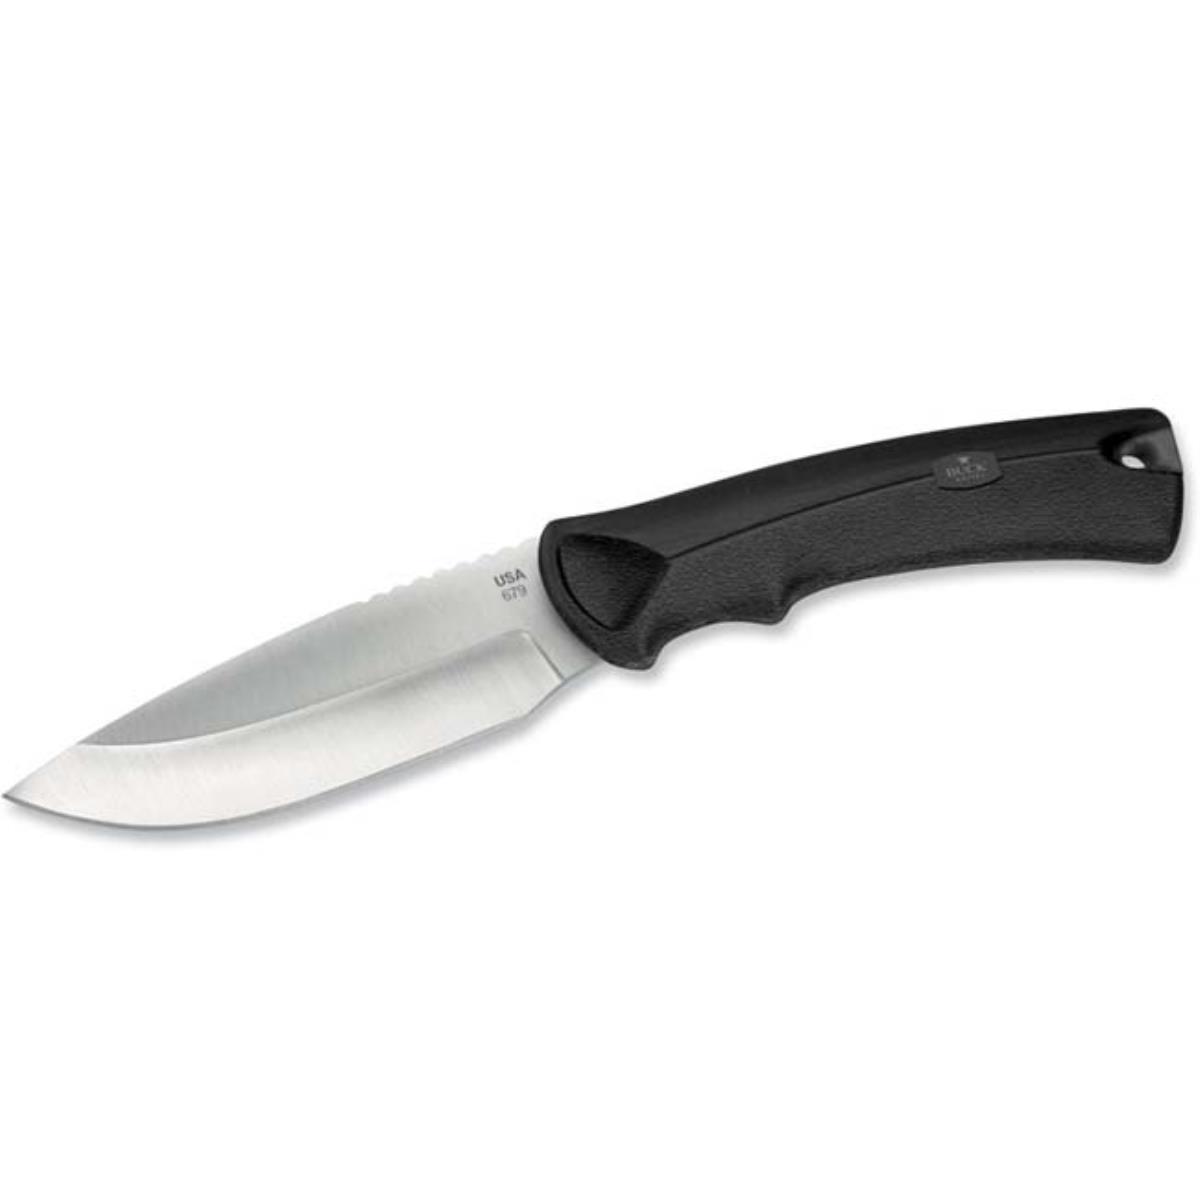 Нож сталь 420HC B0673BKS Lite MAX-Small  Buck Knives нож с фиксированным клинком ontario rd4 micarta серрейтор